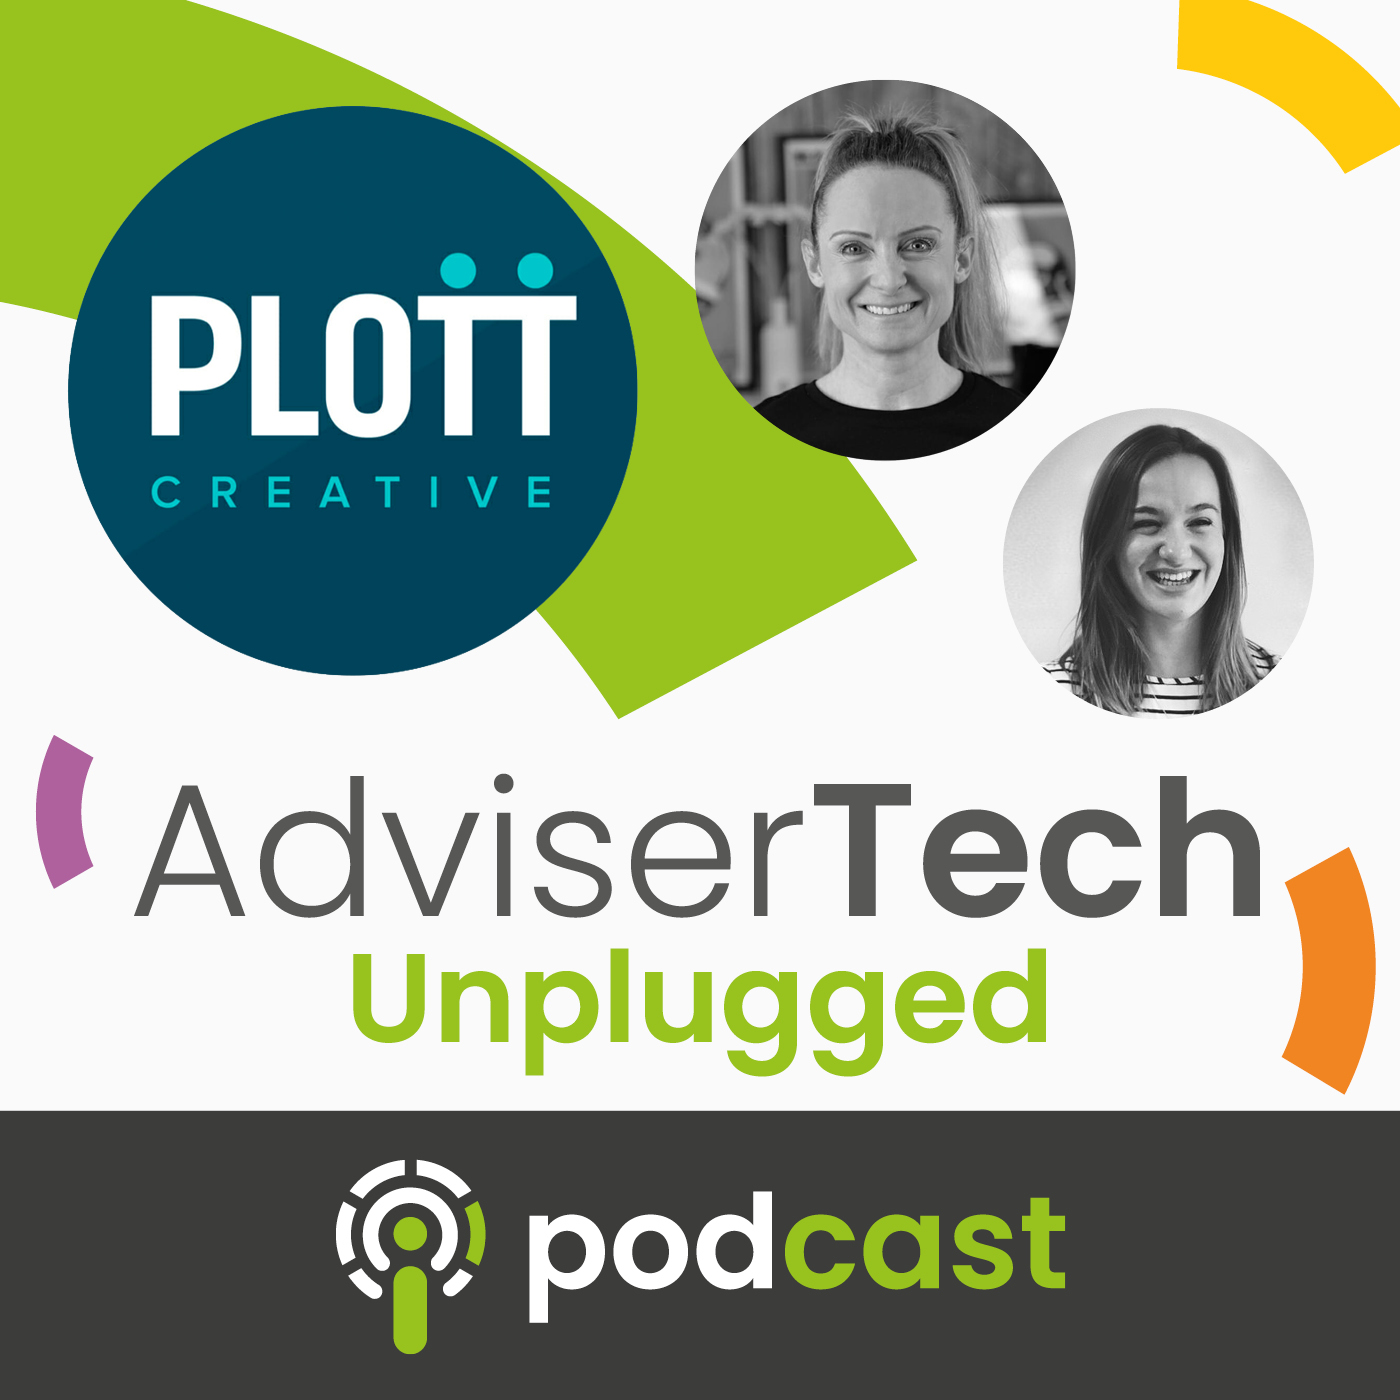 Podcast Episode 2 - PLOTT Creative